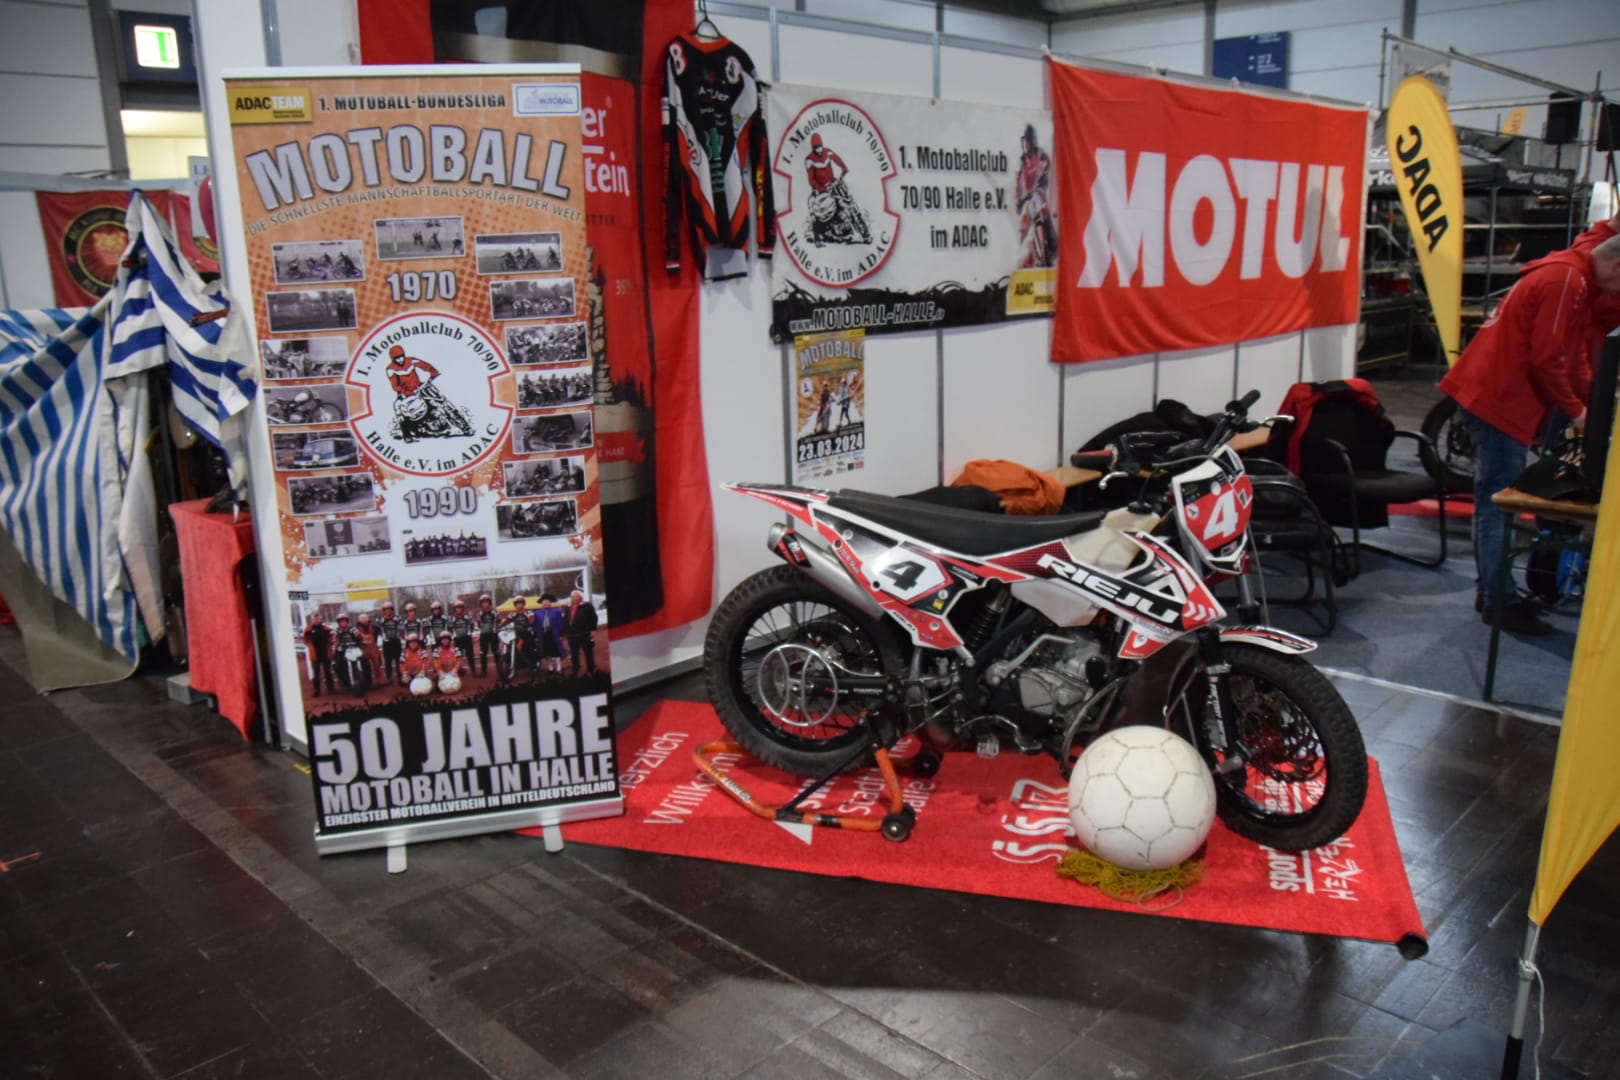 Motorrad Messe Leipzig 2024